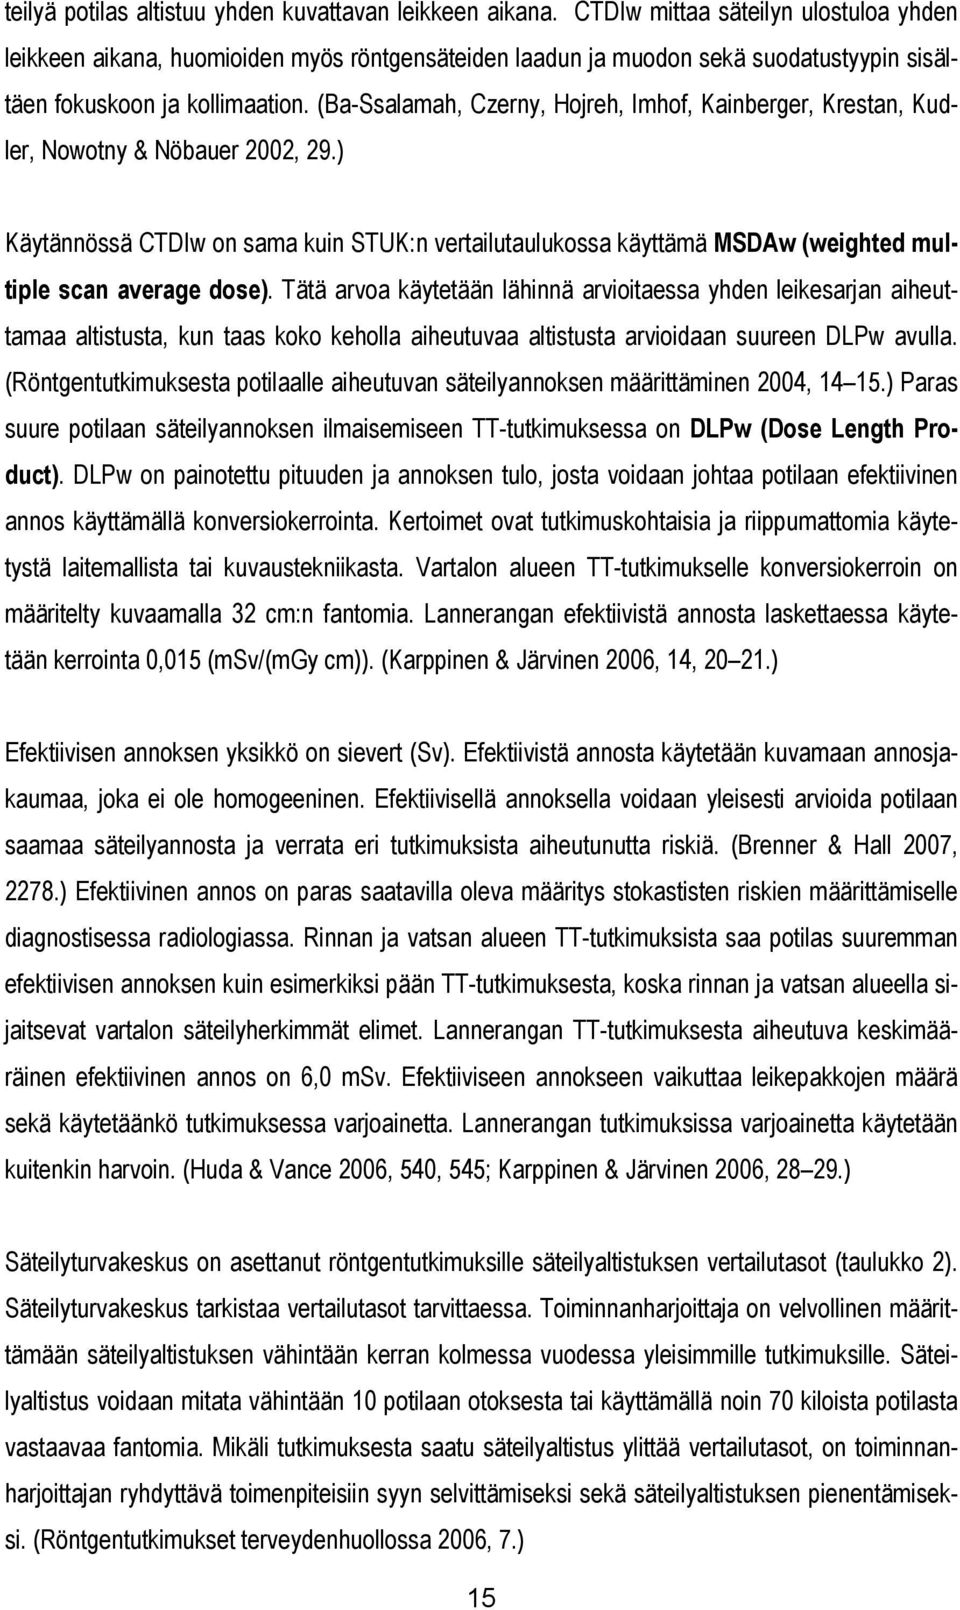 (Ba-Ssalamah, Czerny, Hojreh, Imhof, Kainberger, Krestan, Kudler, Nowotny & Nöbauer 2002, 29.